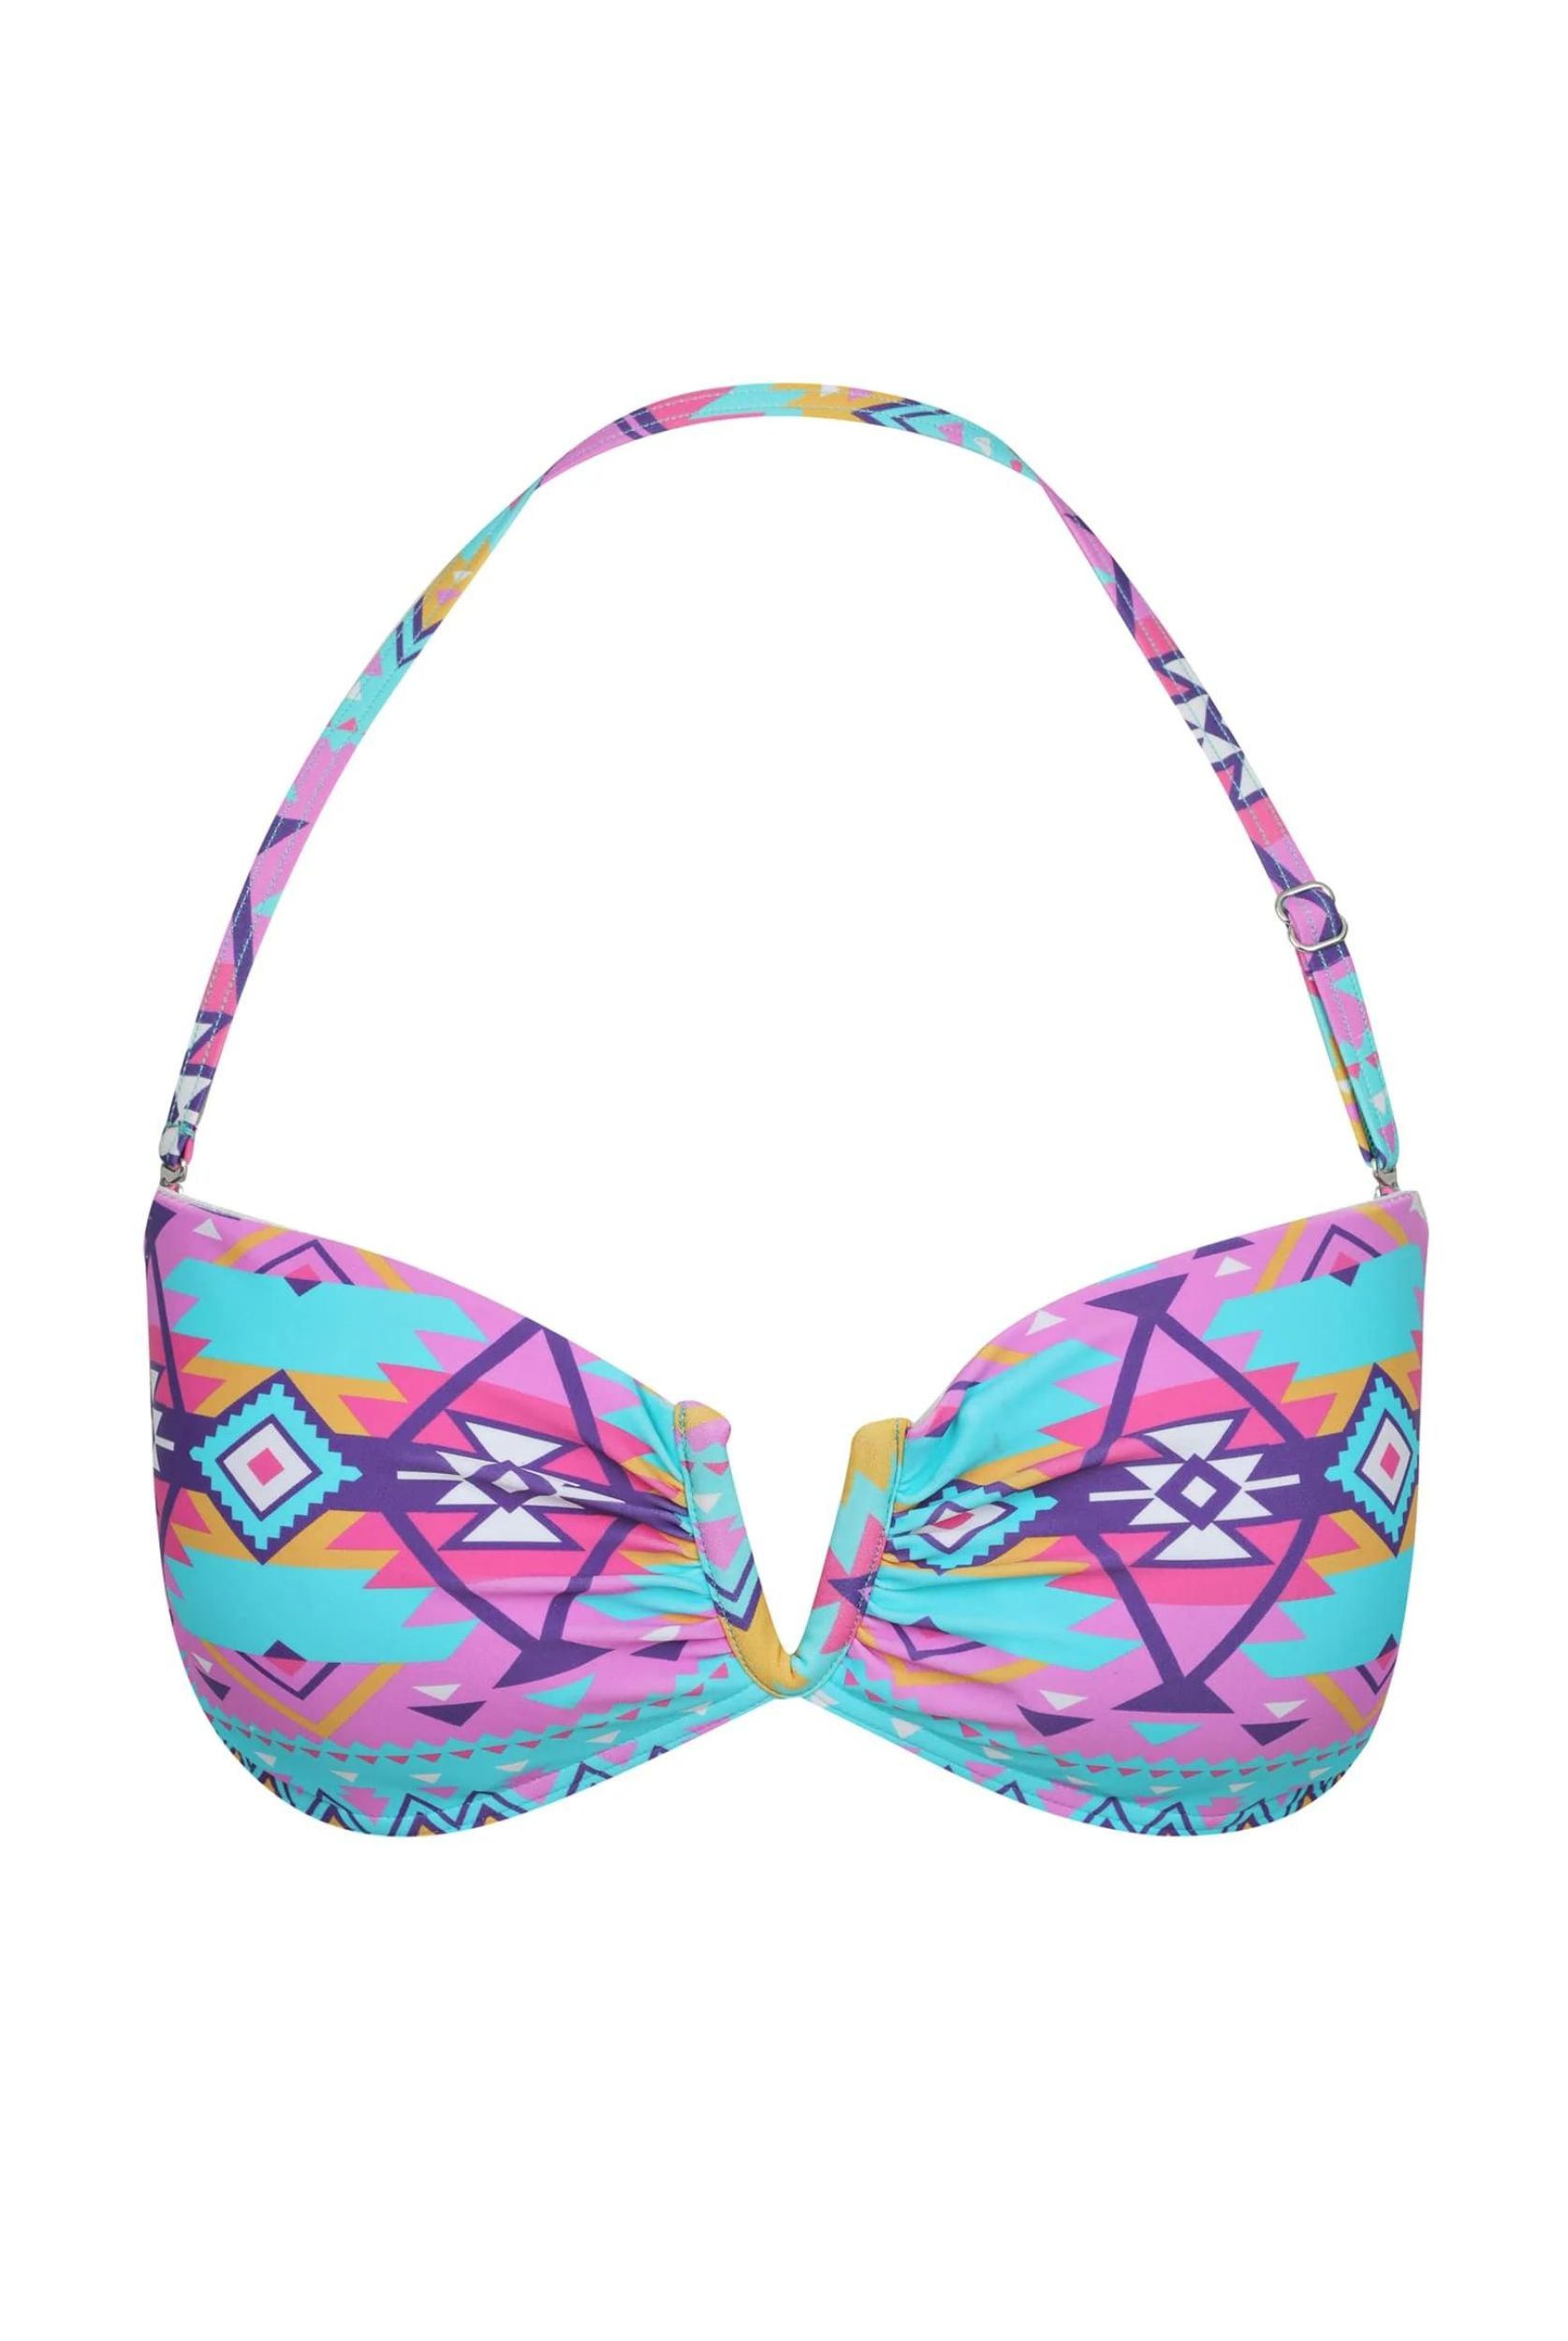 Tozi Print Bikini Top from Infamous Swim